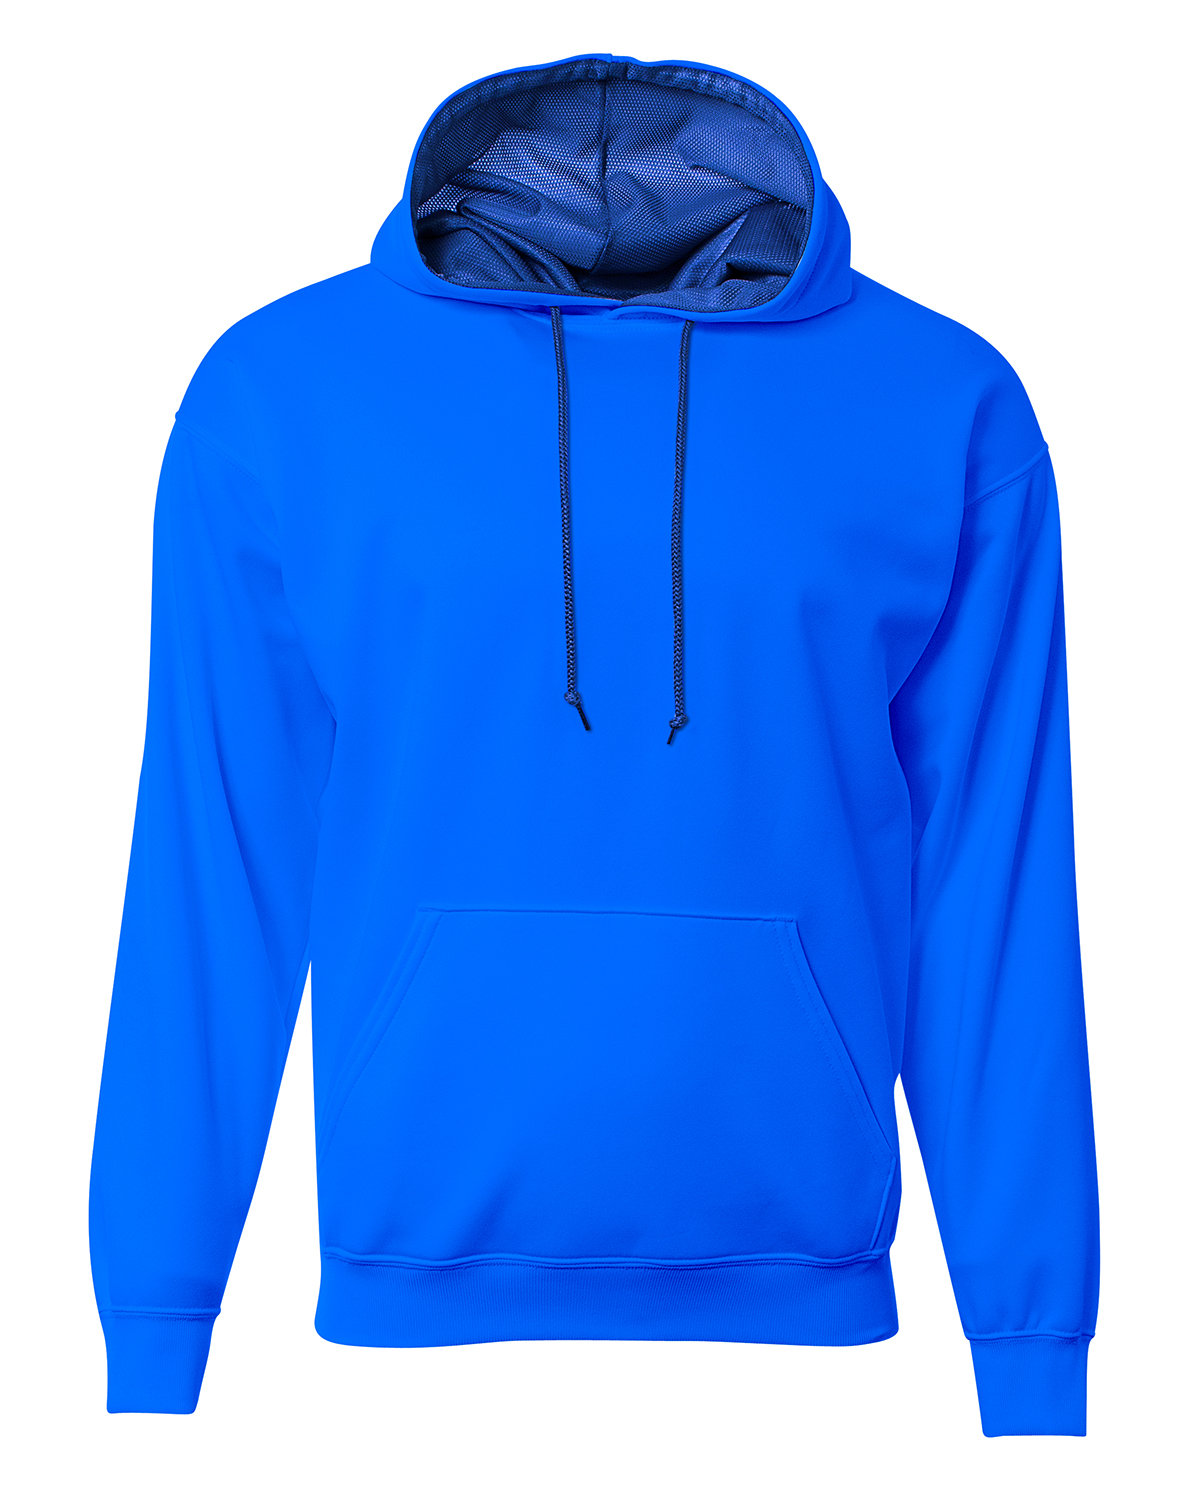 A4 Men's Sprint Tech Fleece Hooded Sweatshirt ROYAL 